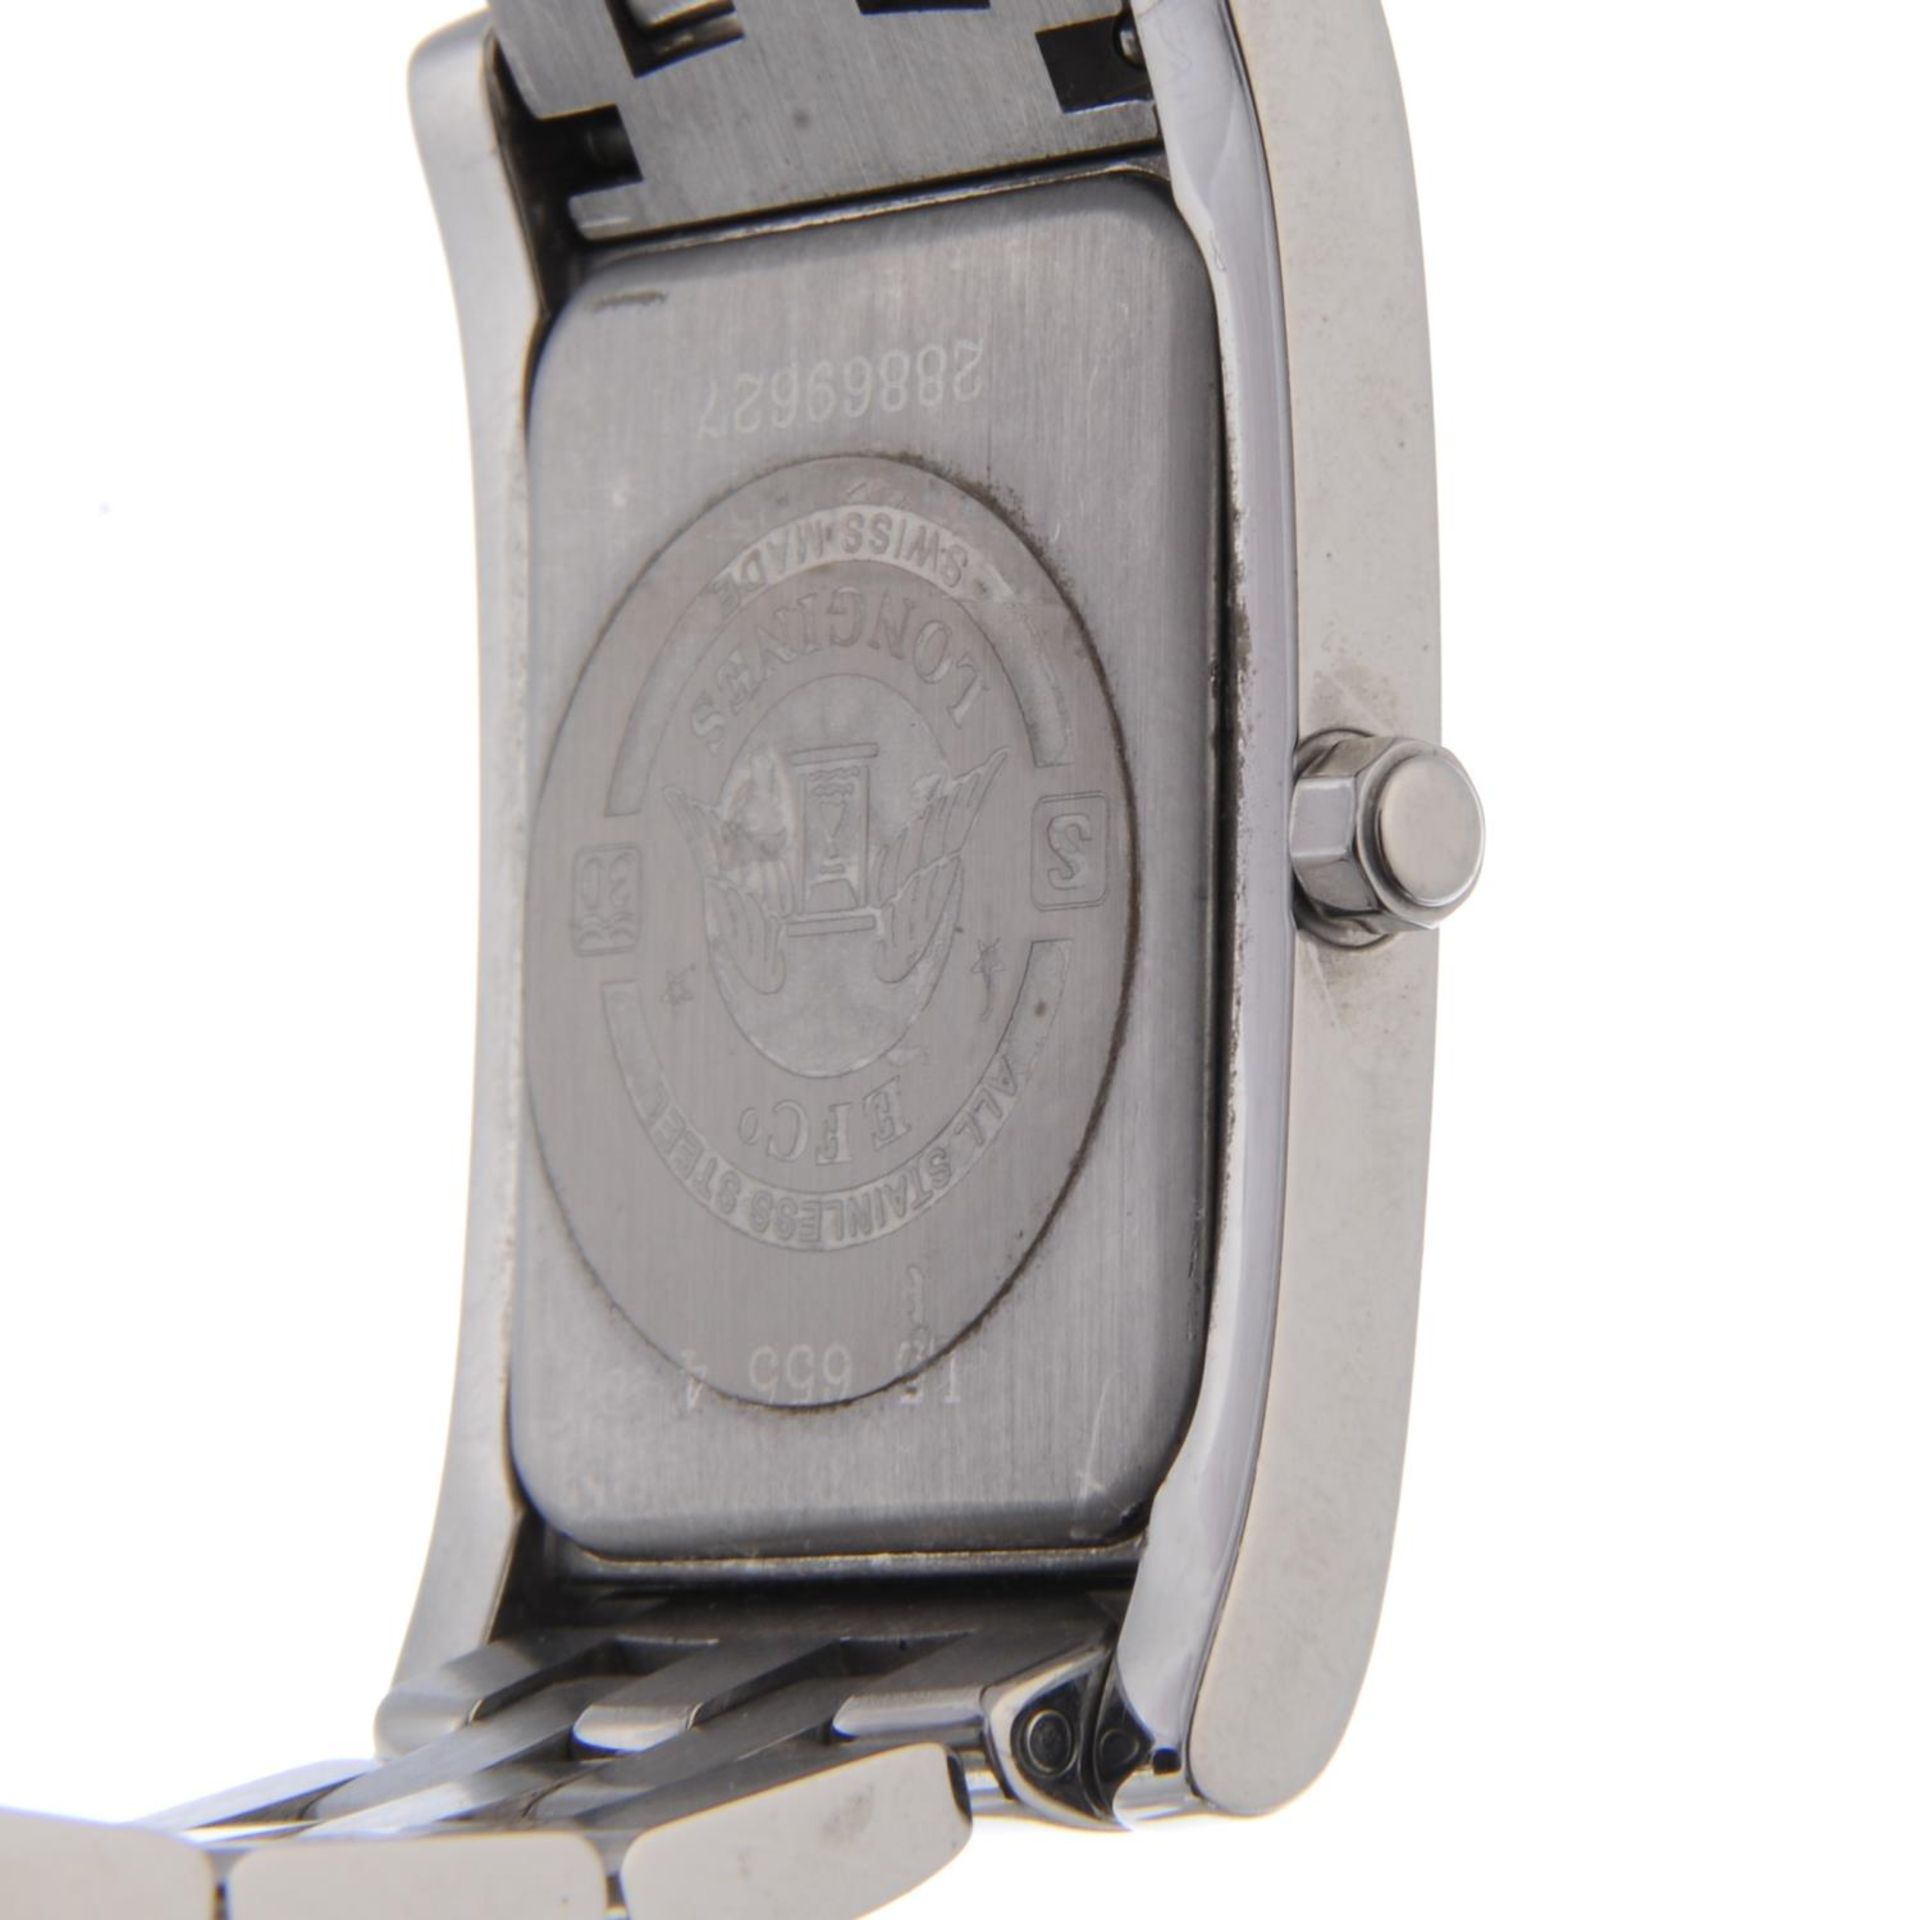 LONGINES - a mid-size DolceVita bracelet watch. - Image 2 of 2